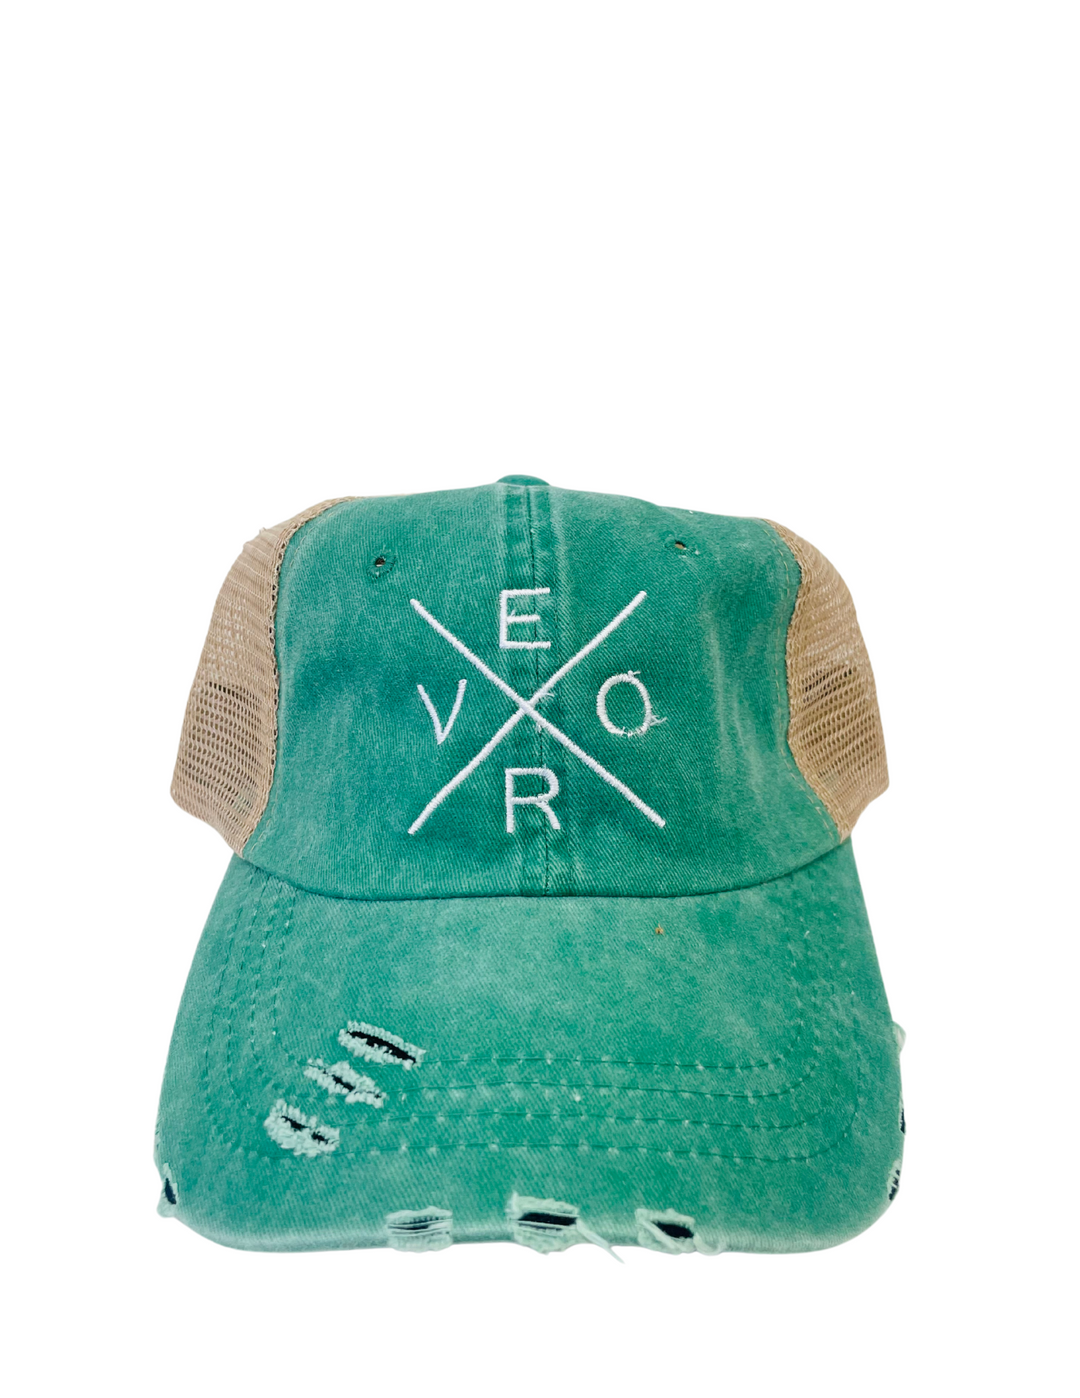 Vero Distressed Trucker Hat - Kelly Green & Khaki